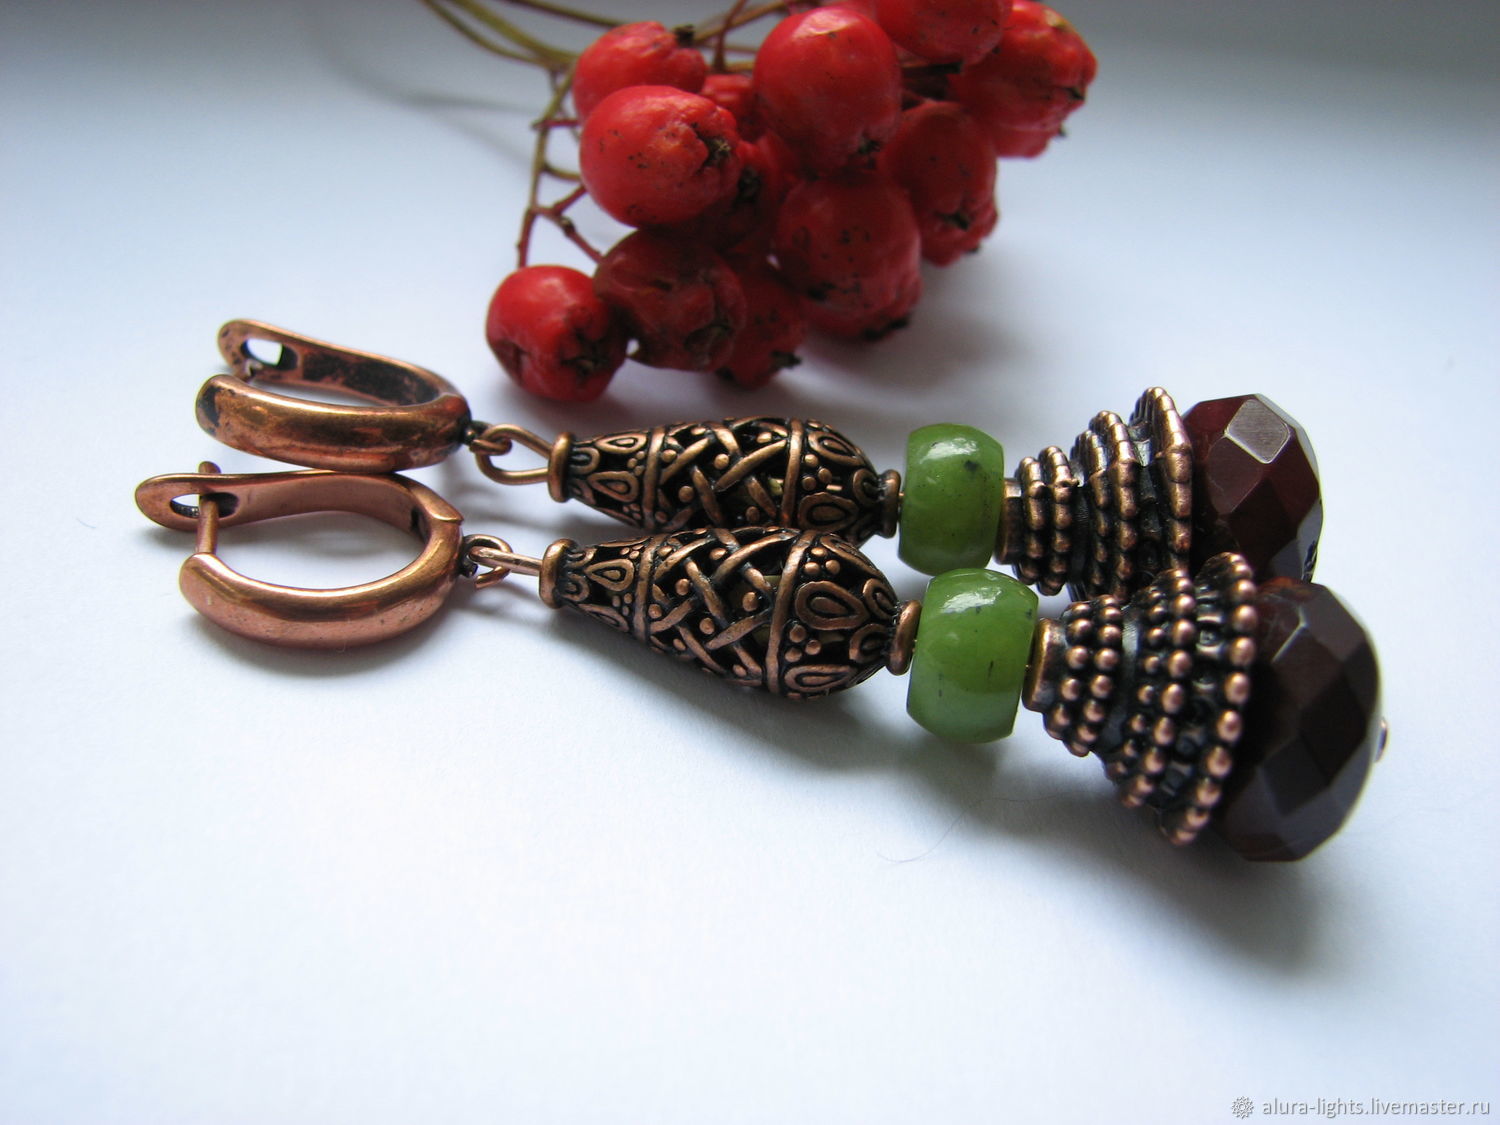 jade earrings india